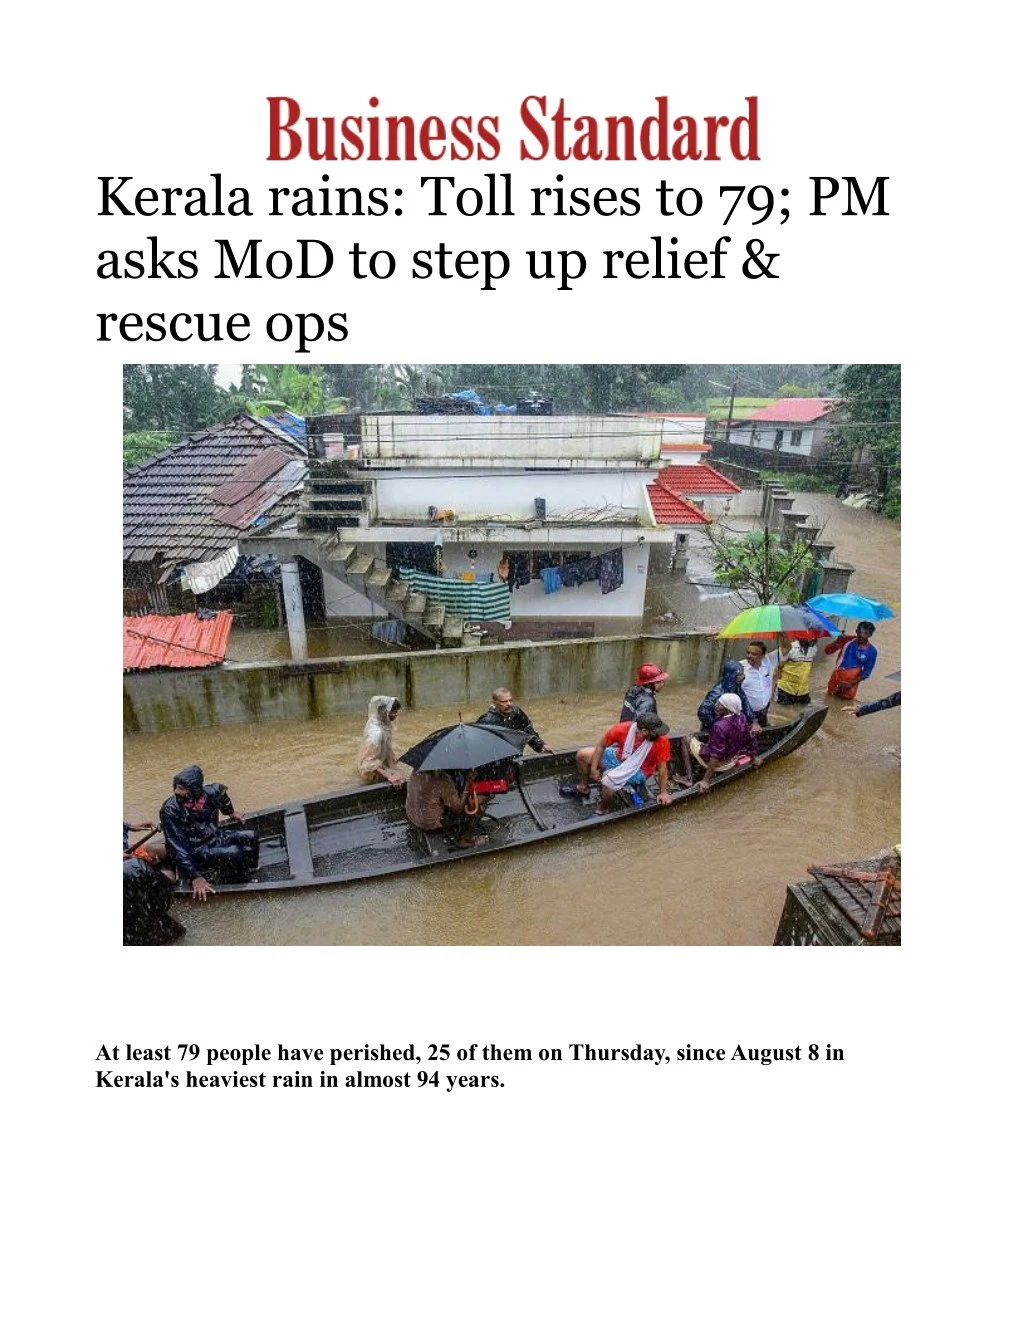 kerala rains toll rises to 79 pm asks mod to step